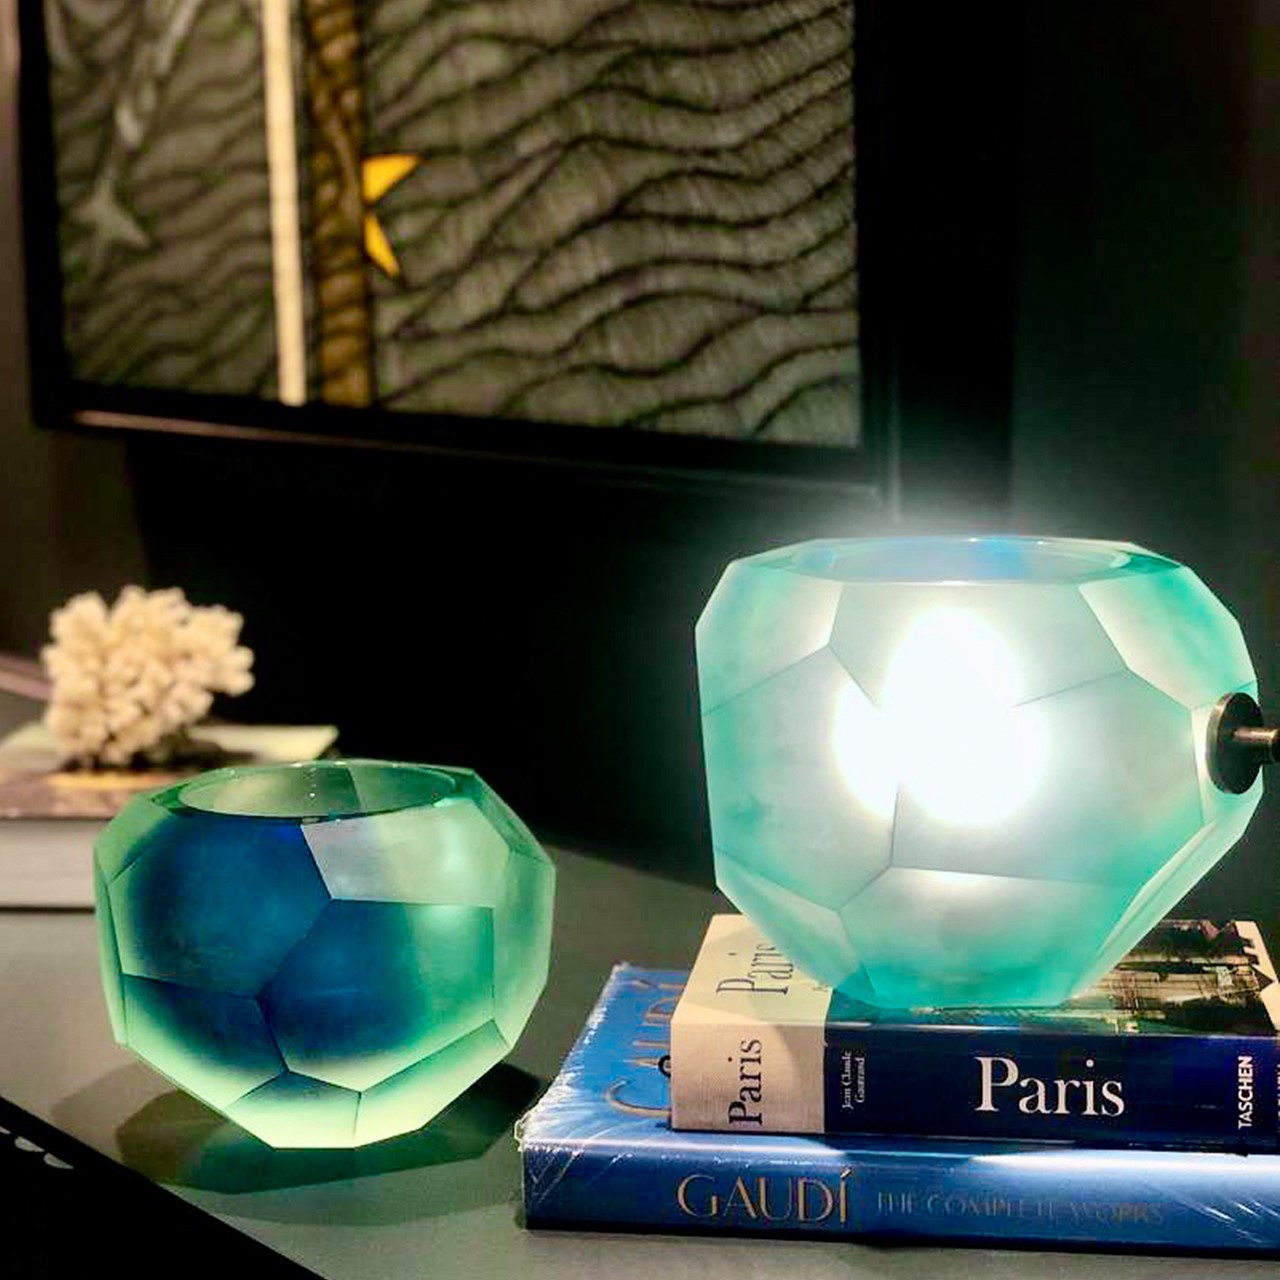 emerald-open-table-lamp